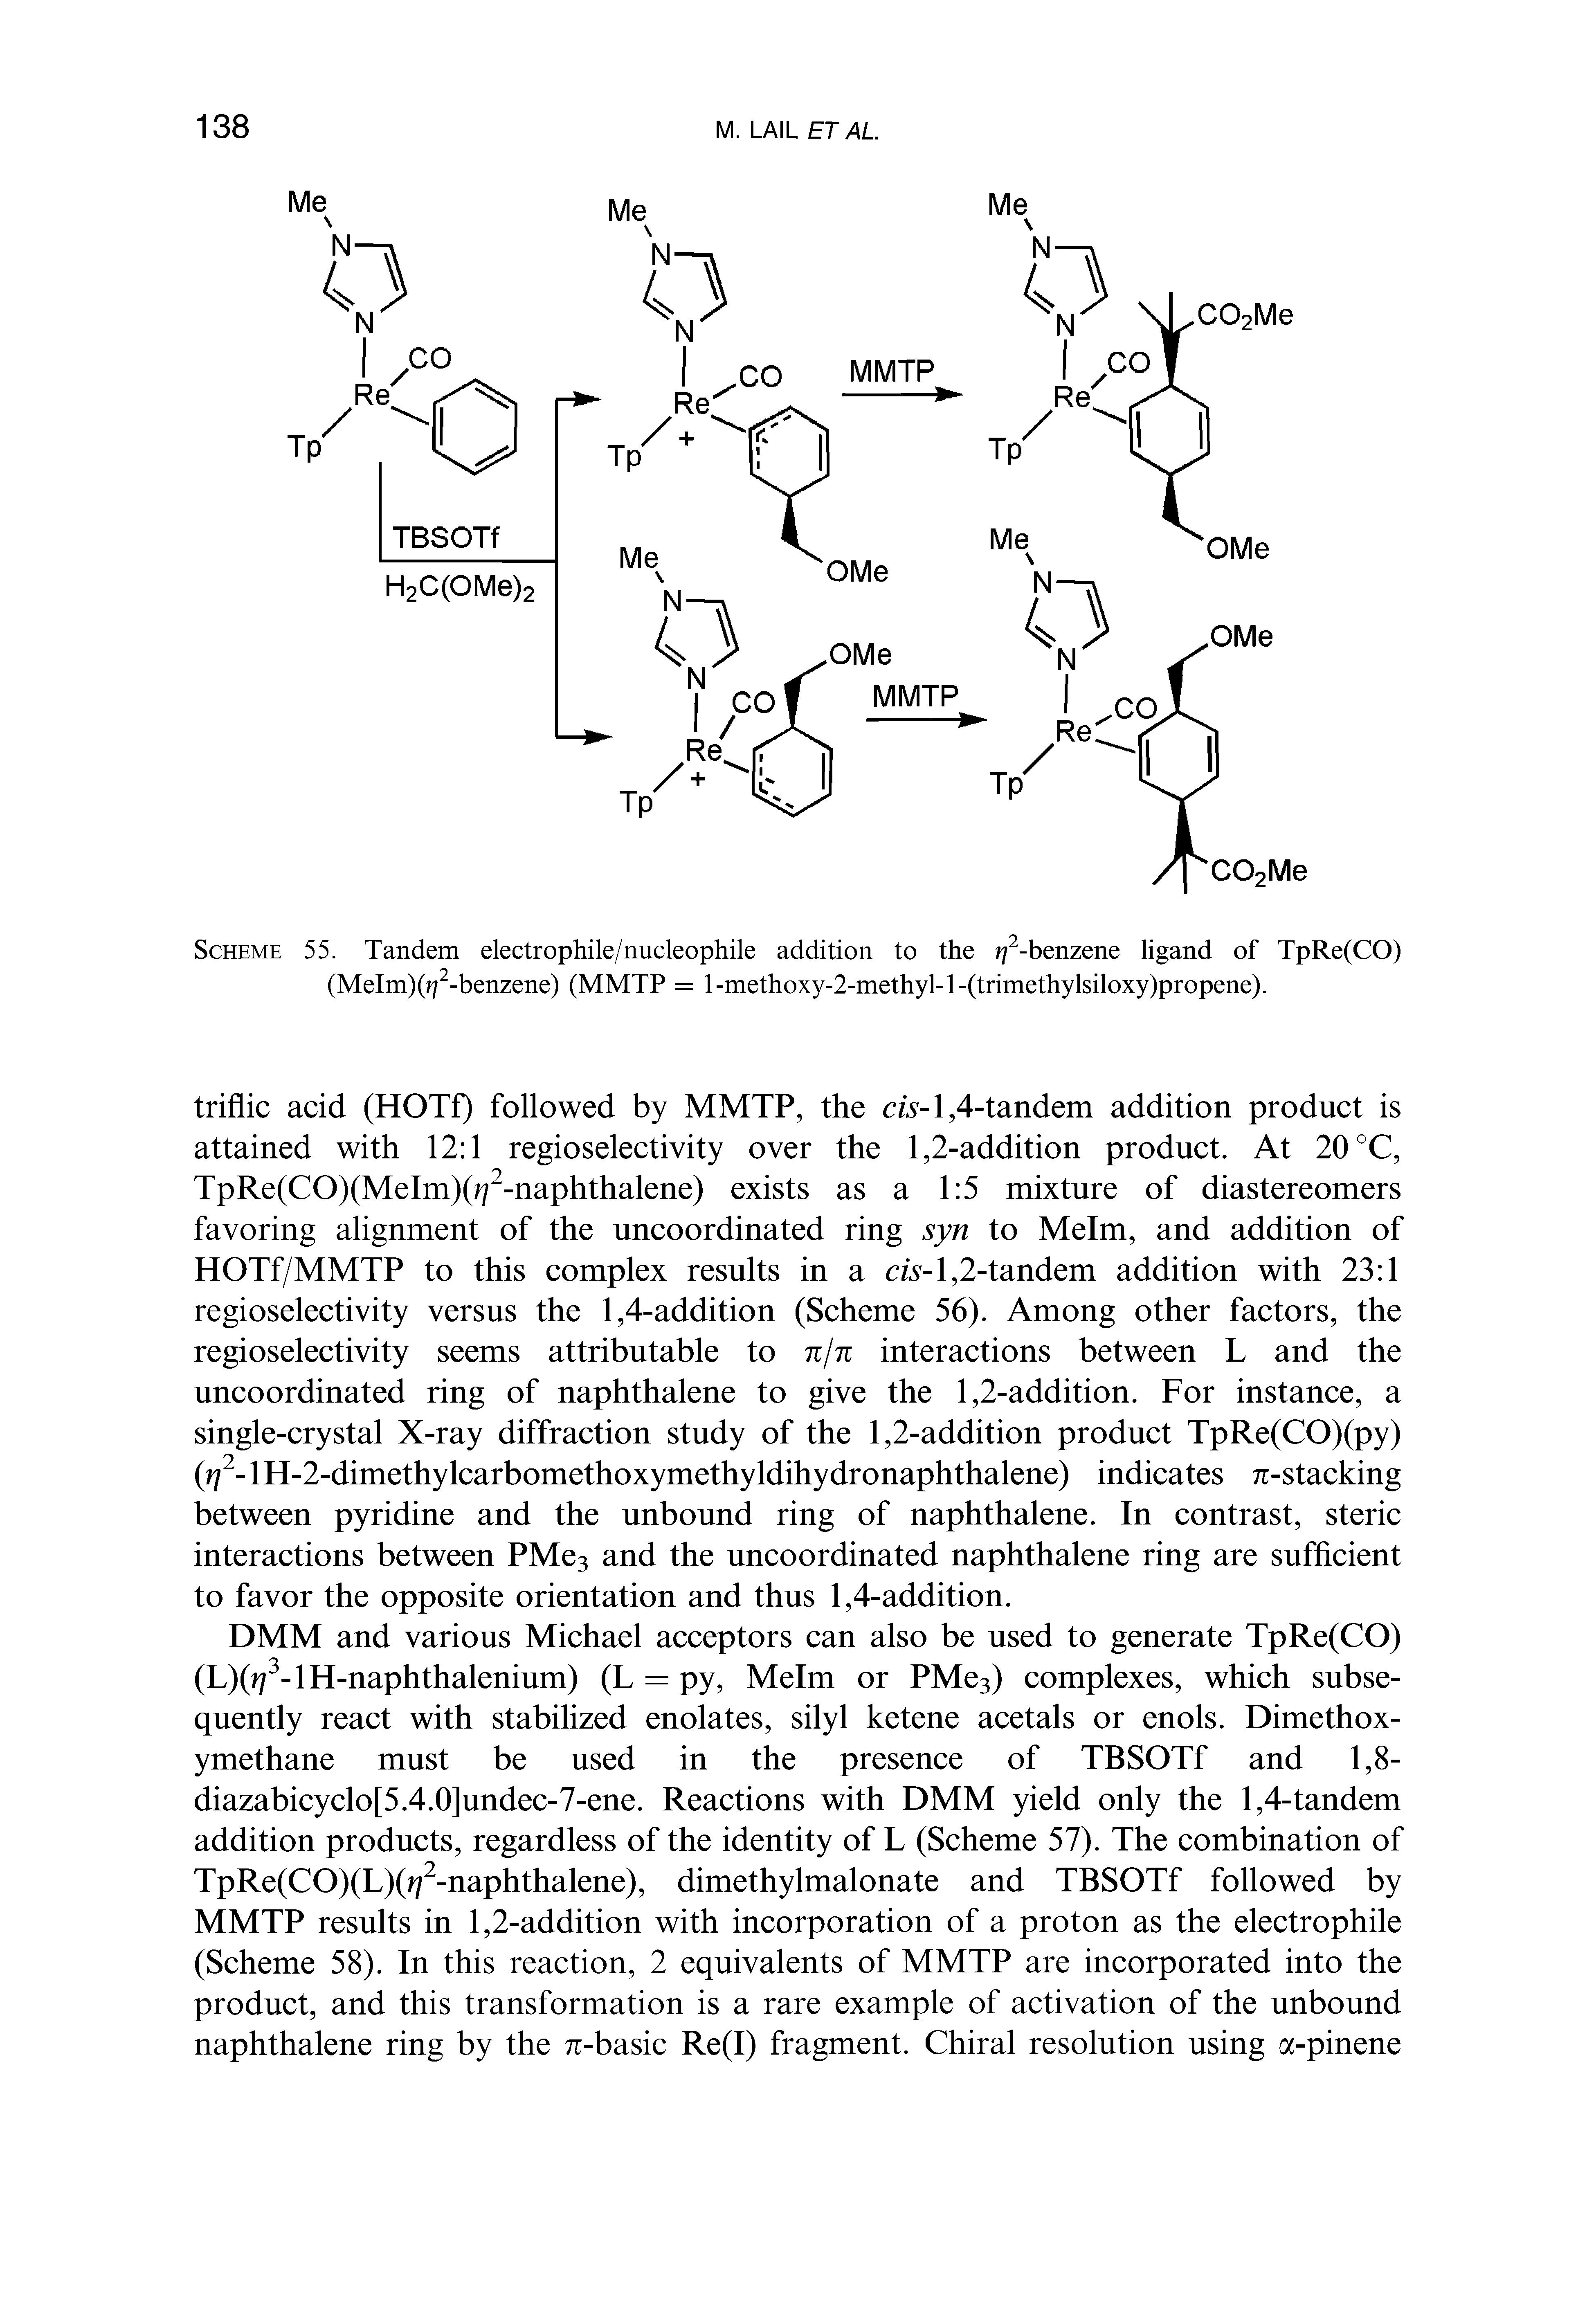 Scheme 55. Tandem electrophile/nucleophile addition to the y -benzene ligand of TpRe(CO) (MeIm)(f/ -benzene) (MMTP = l-methoxy-2-methyl-l-(trimethylsiloxy)propene).